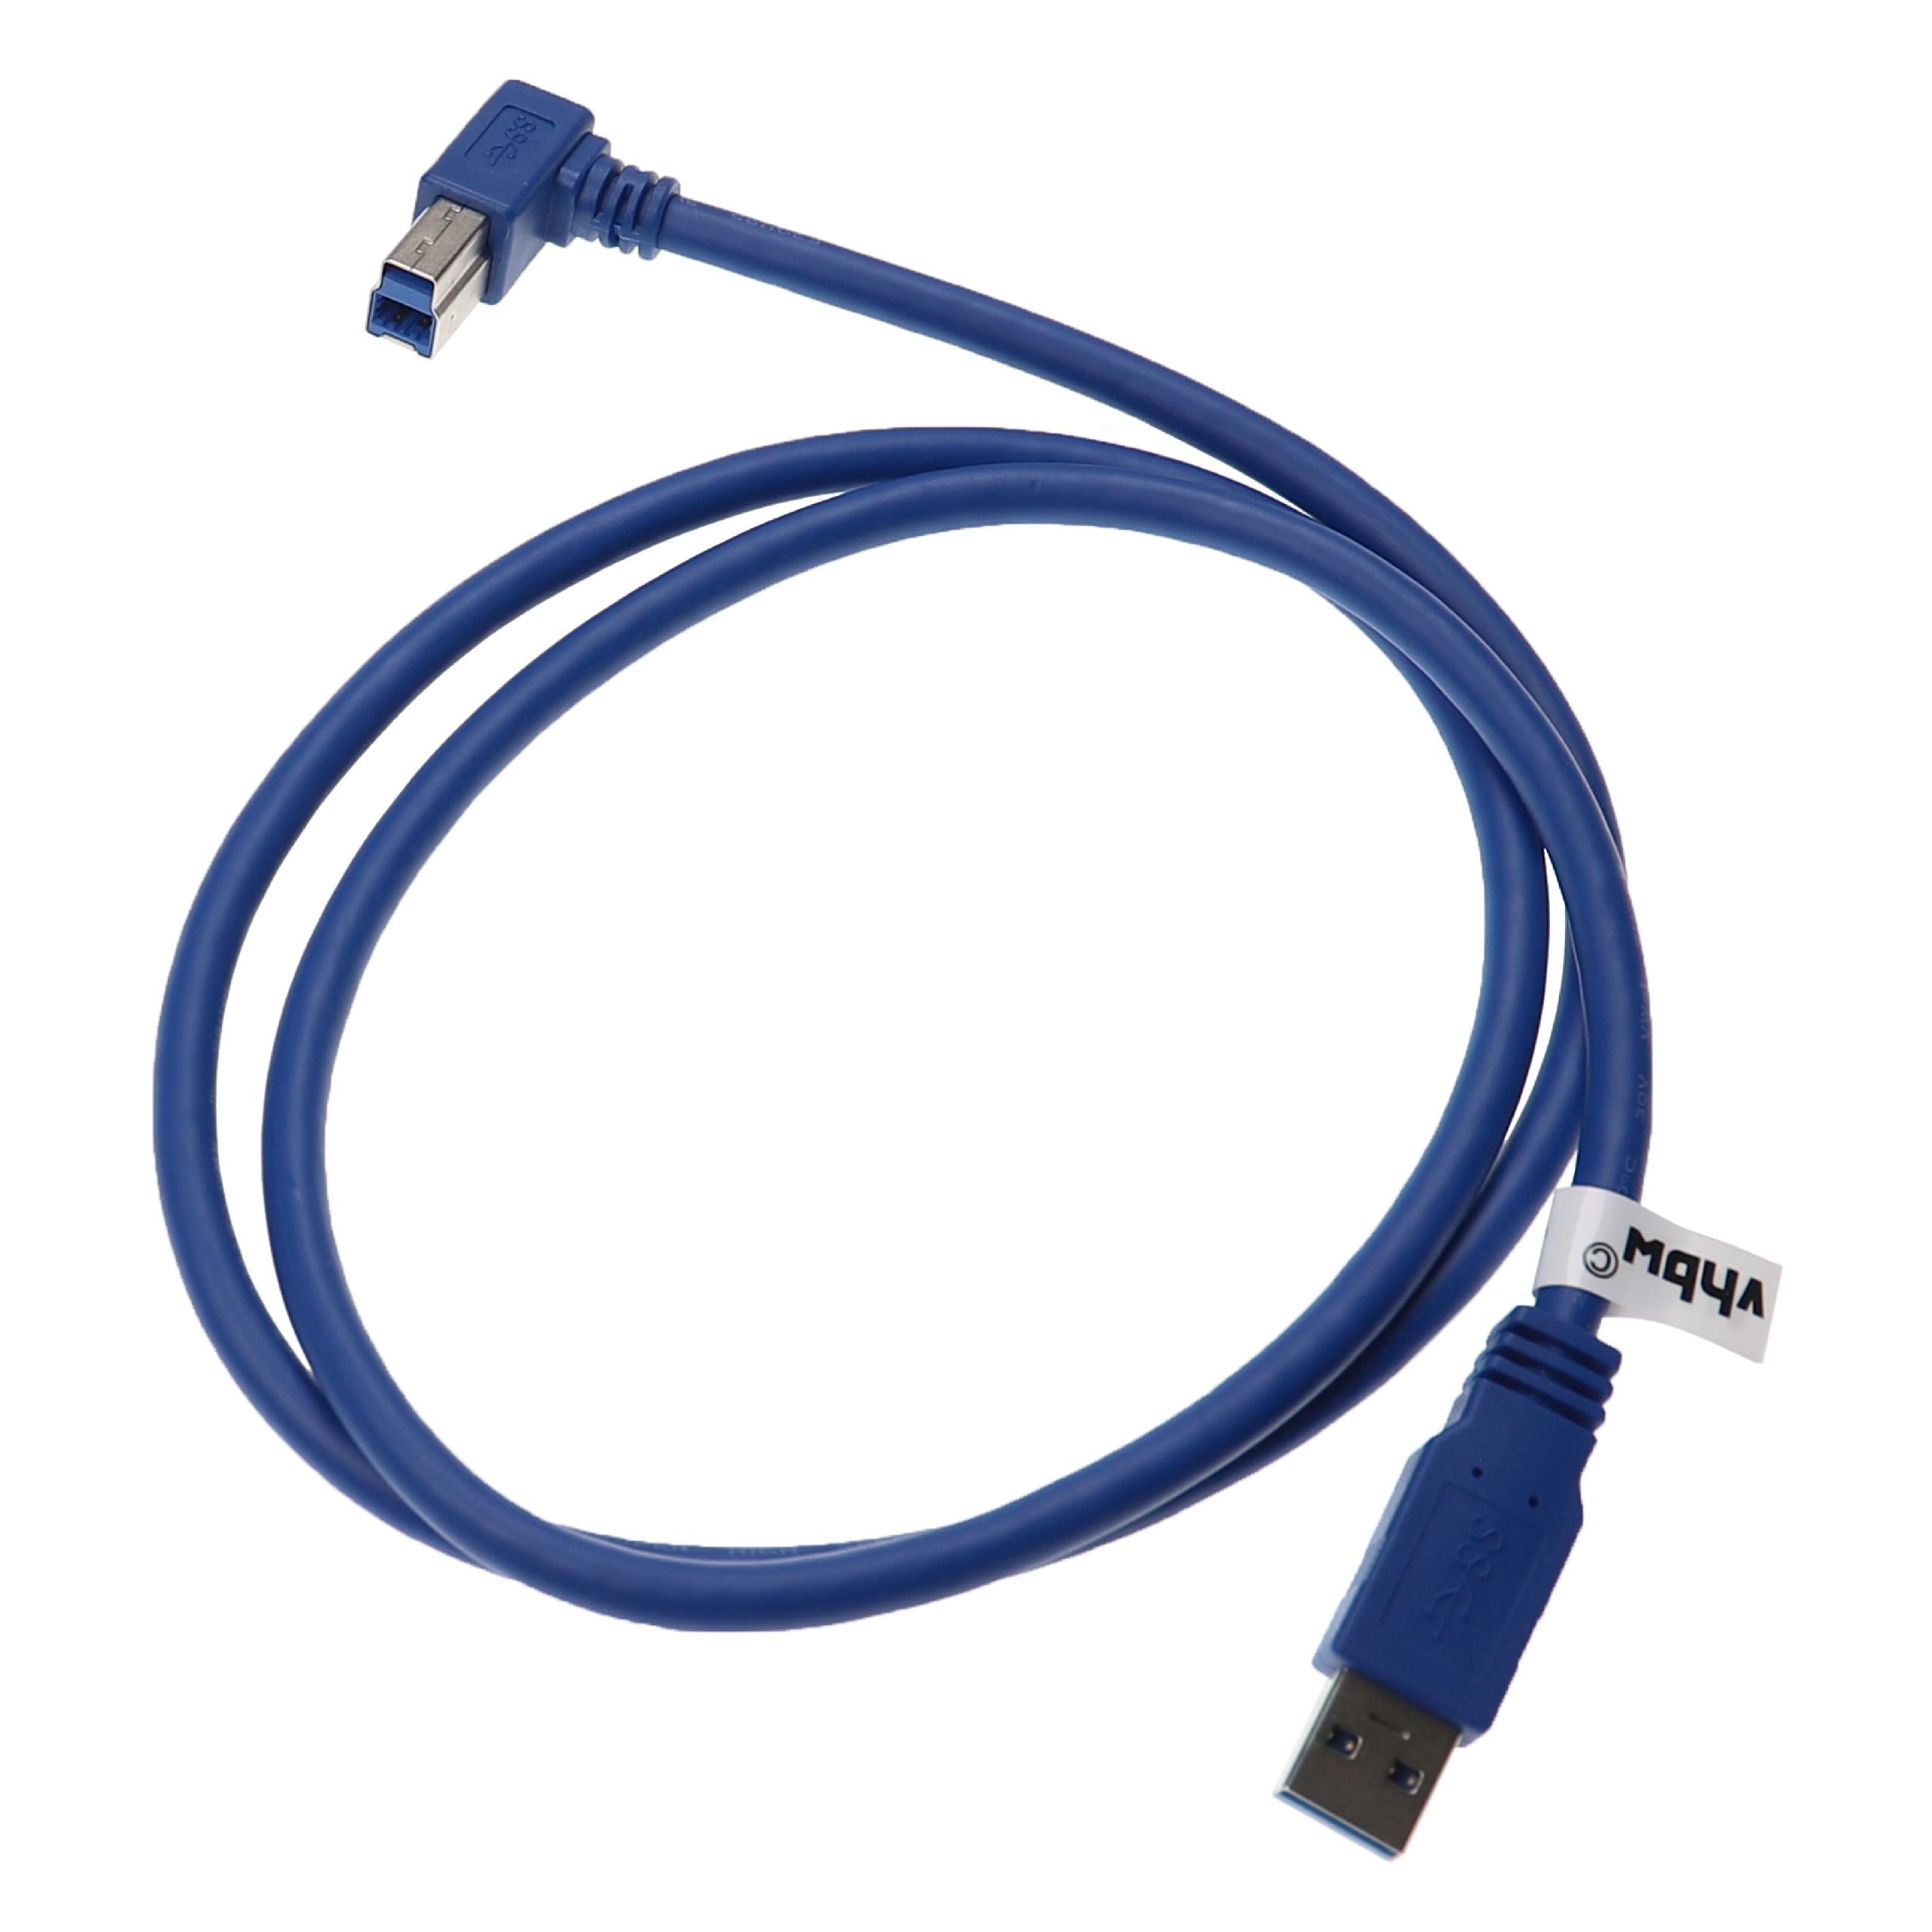 USB 3.0 Kabel Typ A auf Typ B - USB Datenkabel 1 m Blau